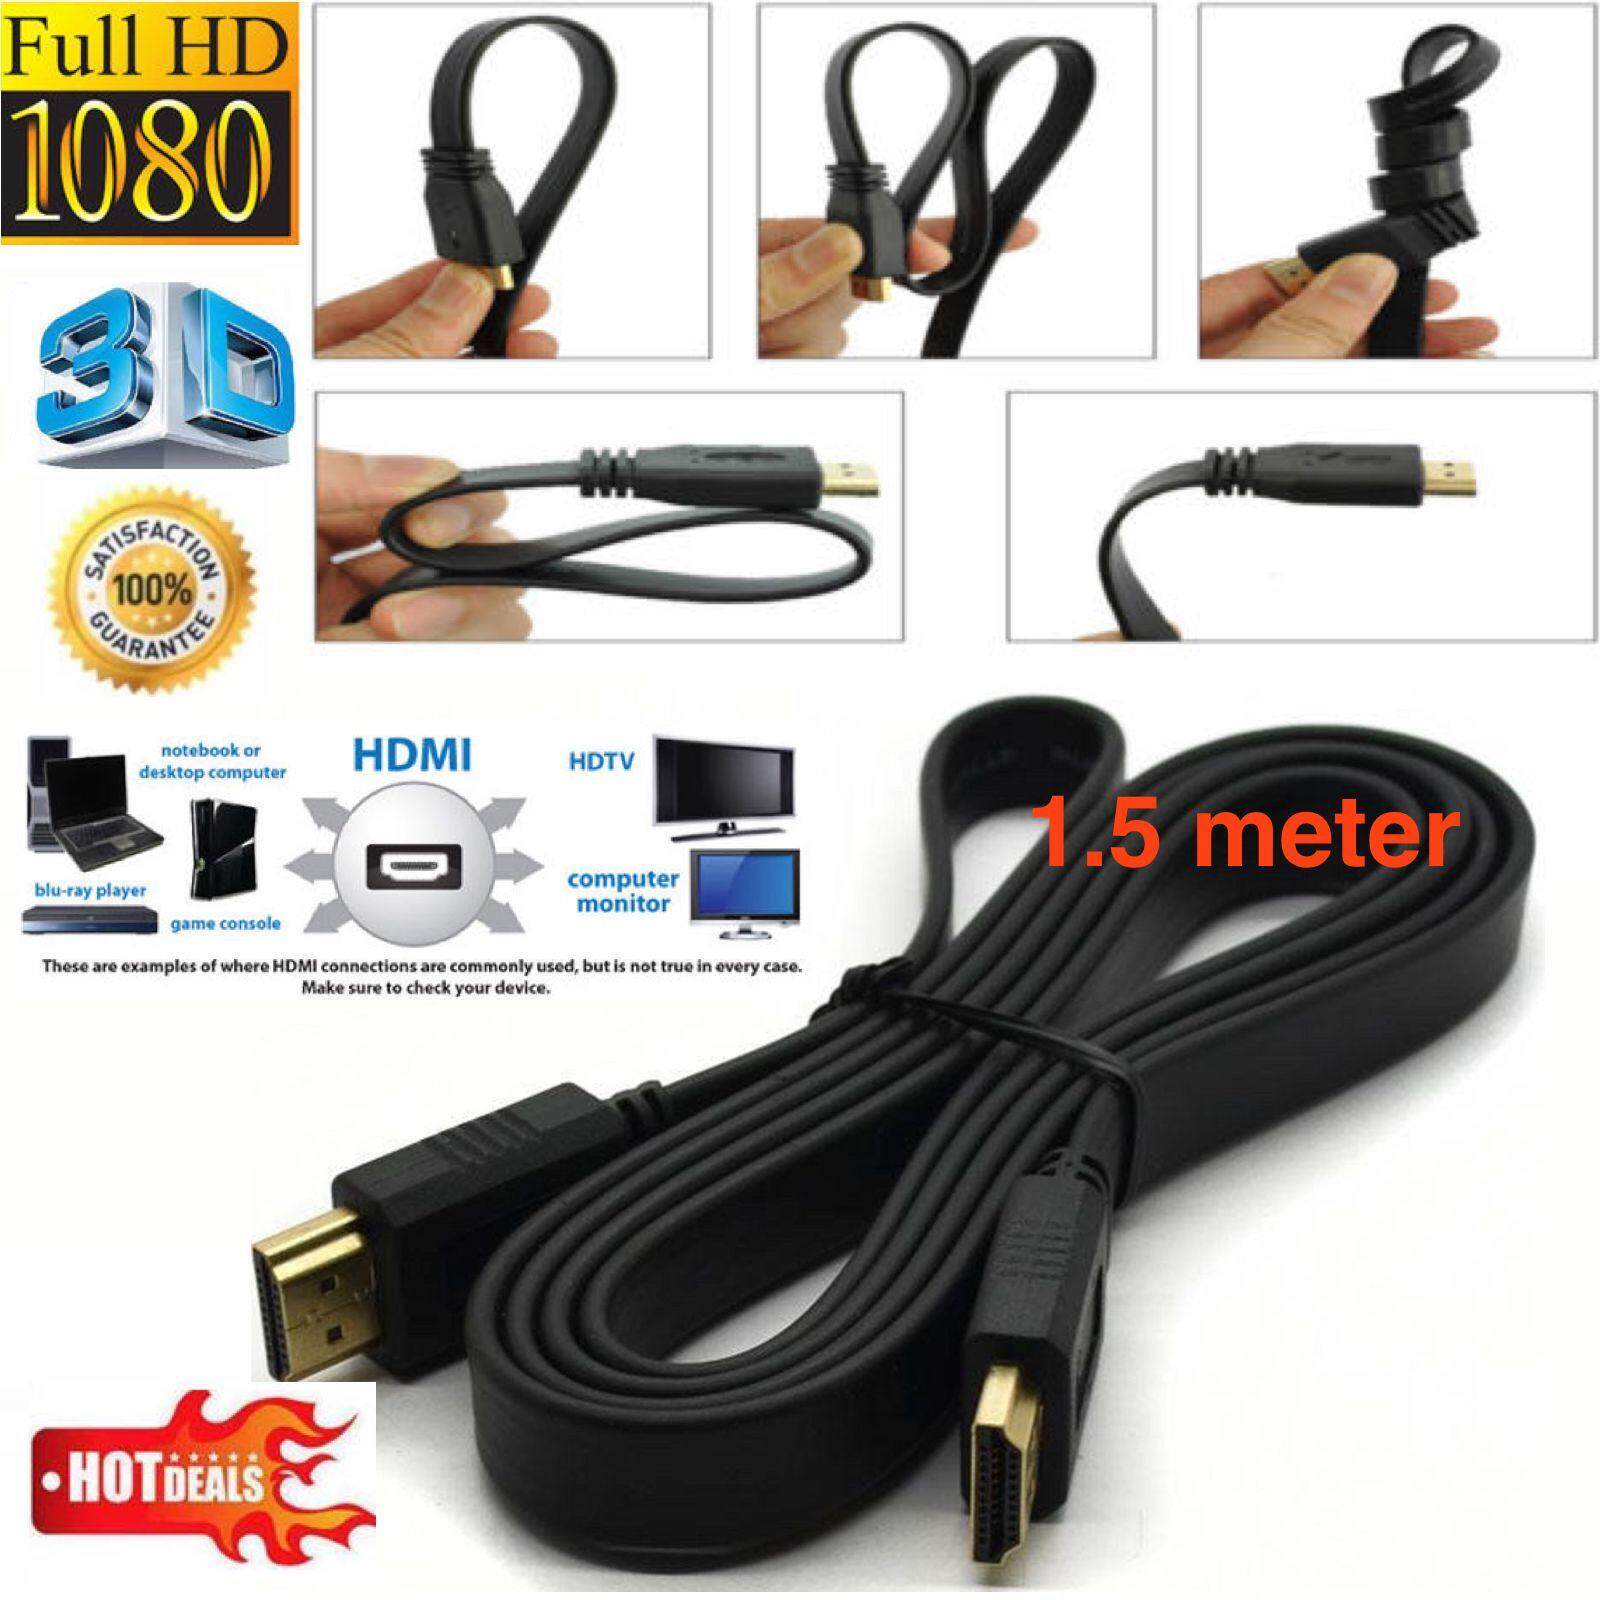 Premium Flat HDMI Cable High Speed With Ethernet Gold v1.4 HDTV 1080p SKY 4K 3D สายแบบอ่อนแบนยาว 1.5เมตร